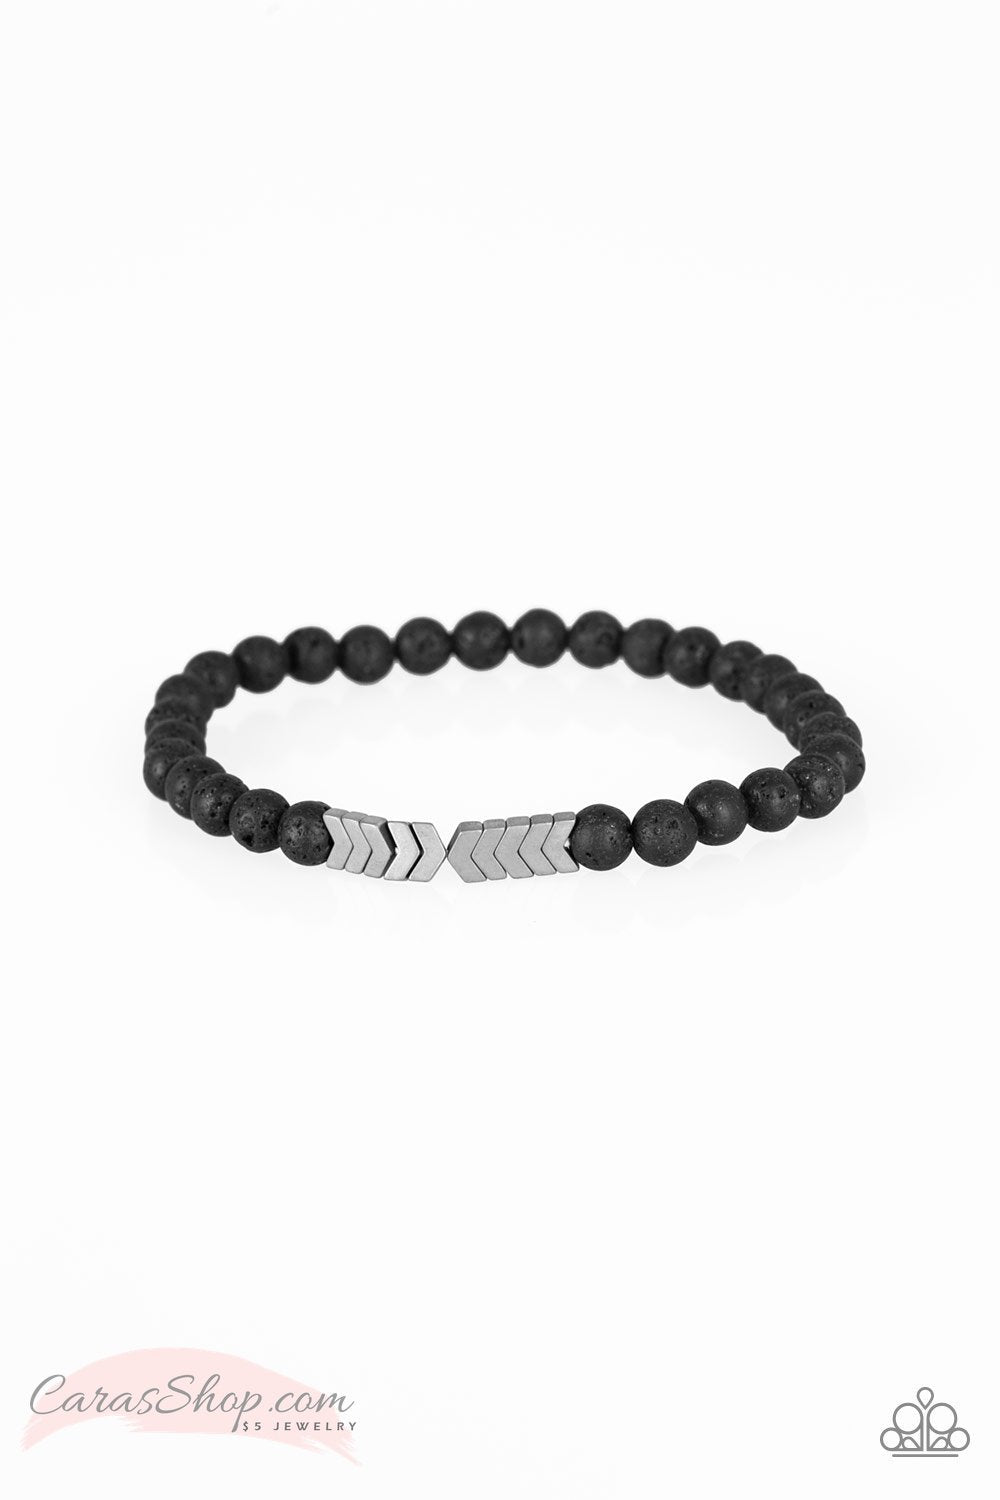 Lost Arrow Black Lava Rock and Silver Stretch Bracelet Paparazzi Accessories-CarasShop.com - $5 Jewelry by Cara Jewels